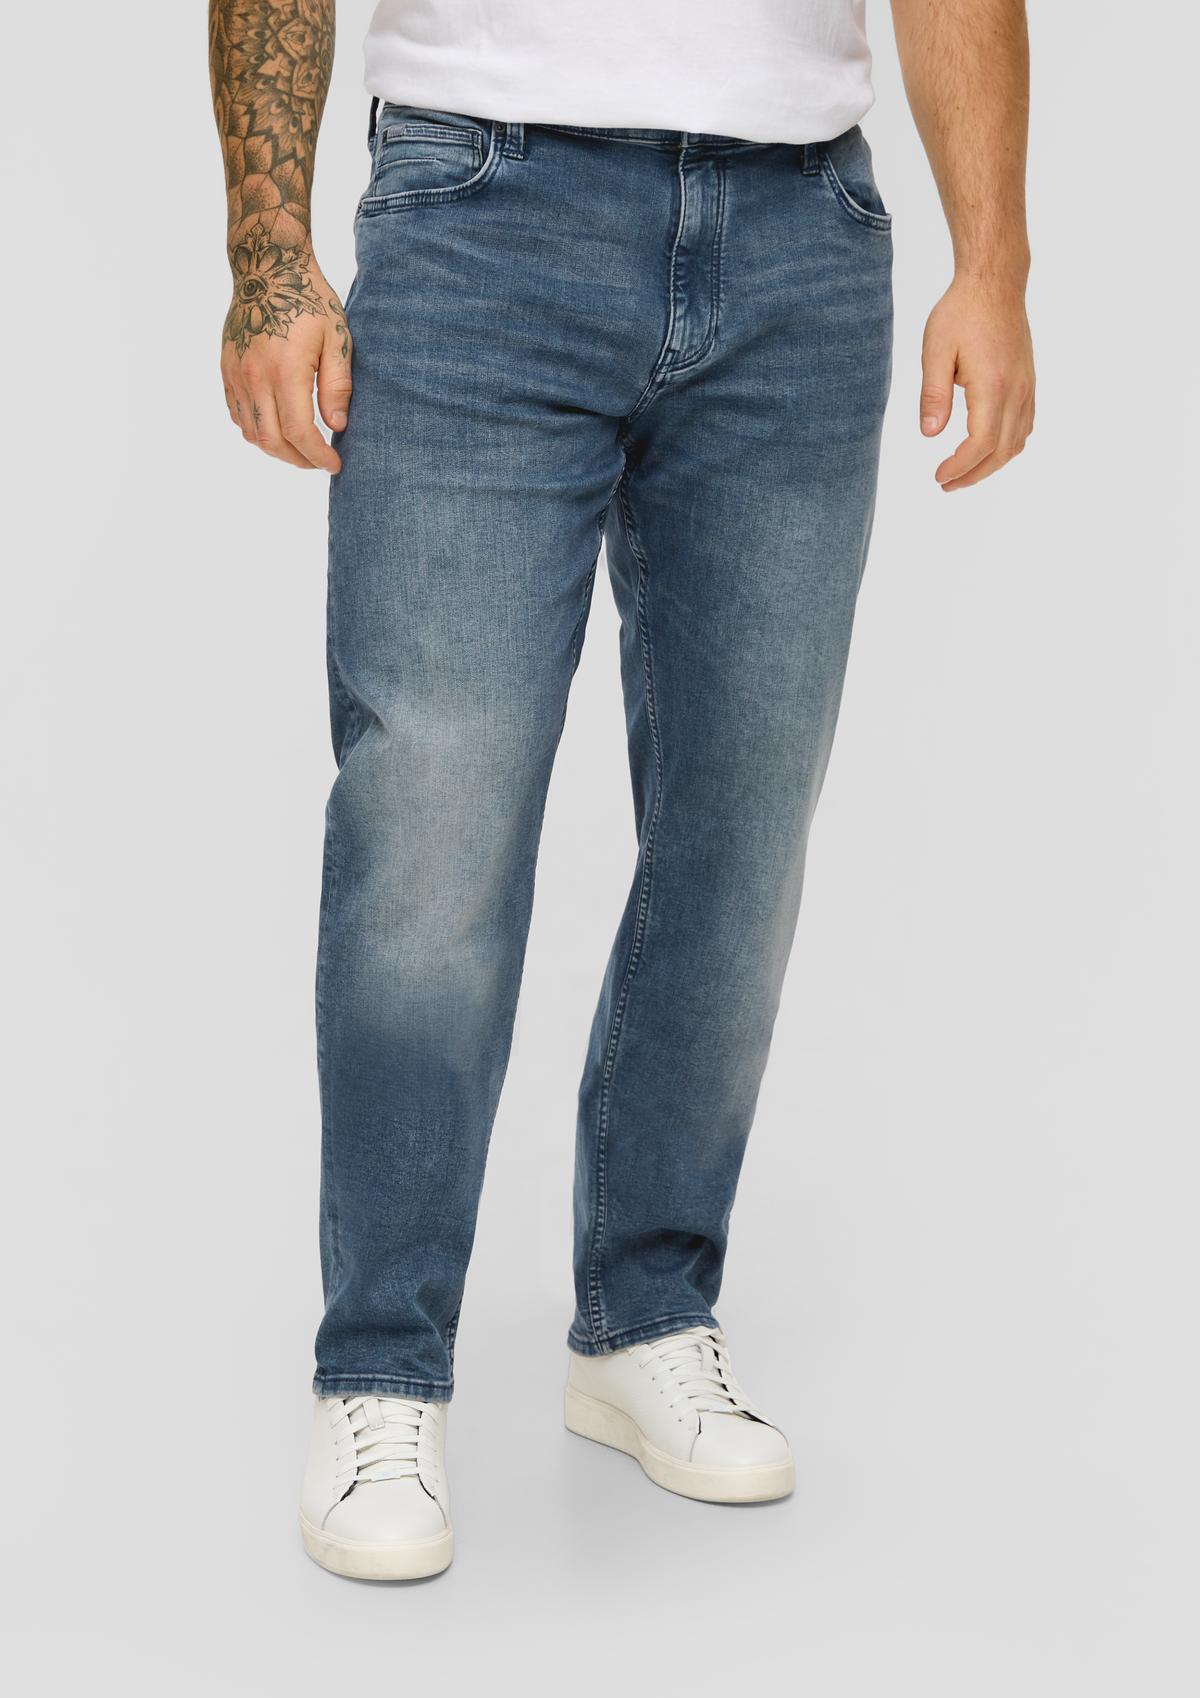 fit regular mid / / blue regular York rise / - leg jeans